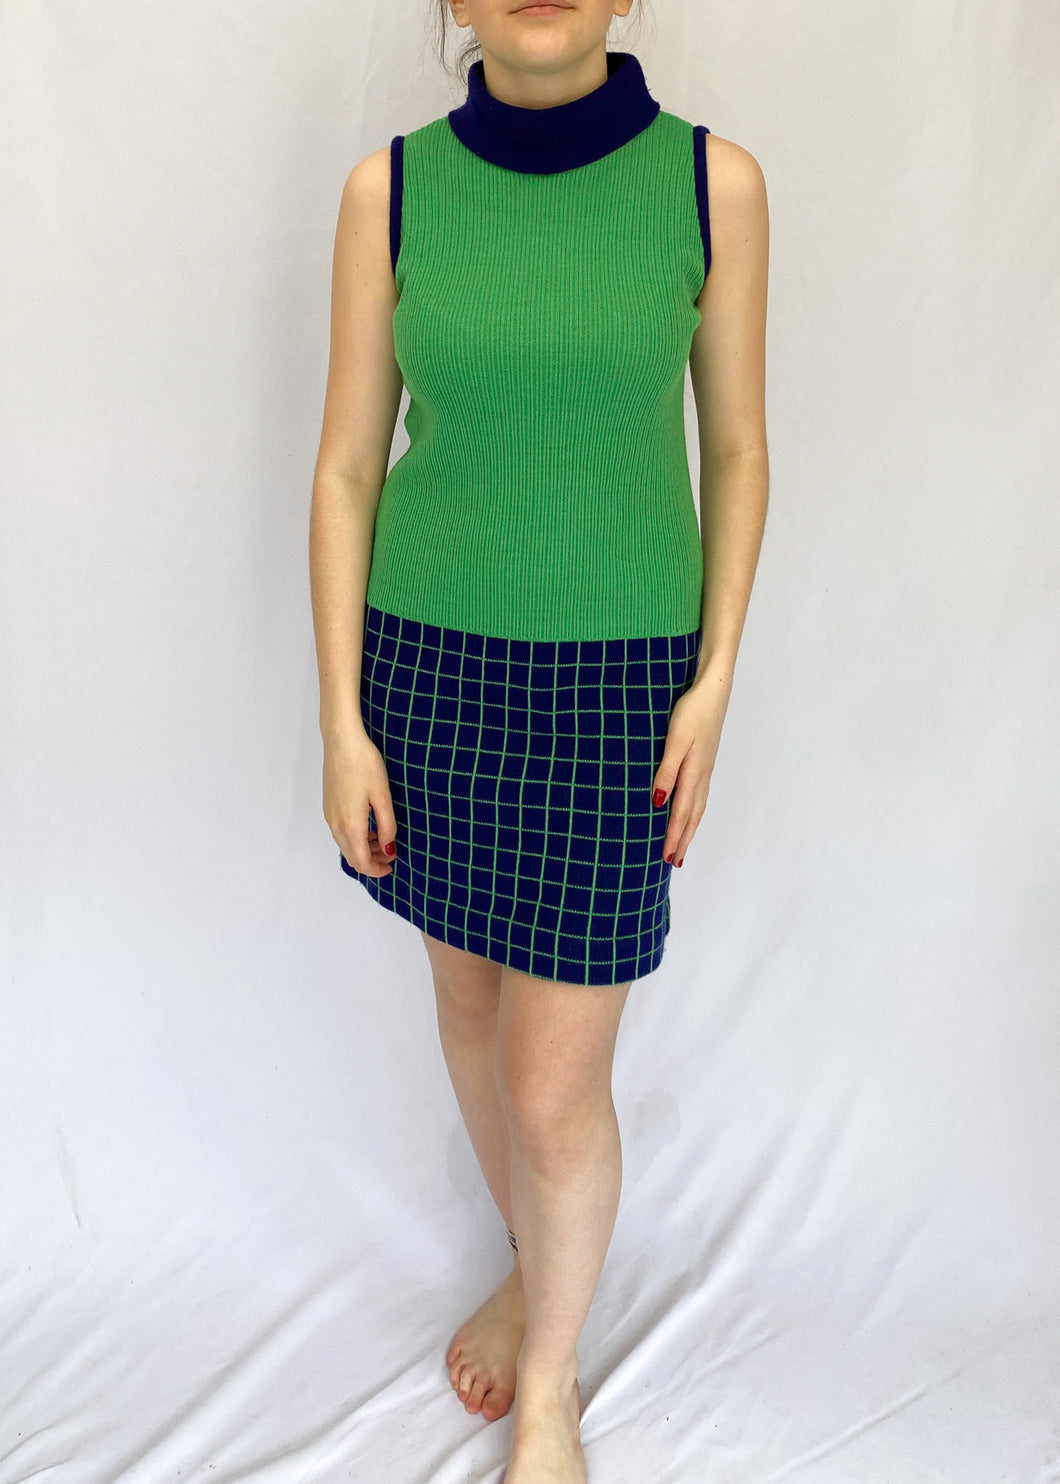 60's Sleeveless Mod Knit Dress